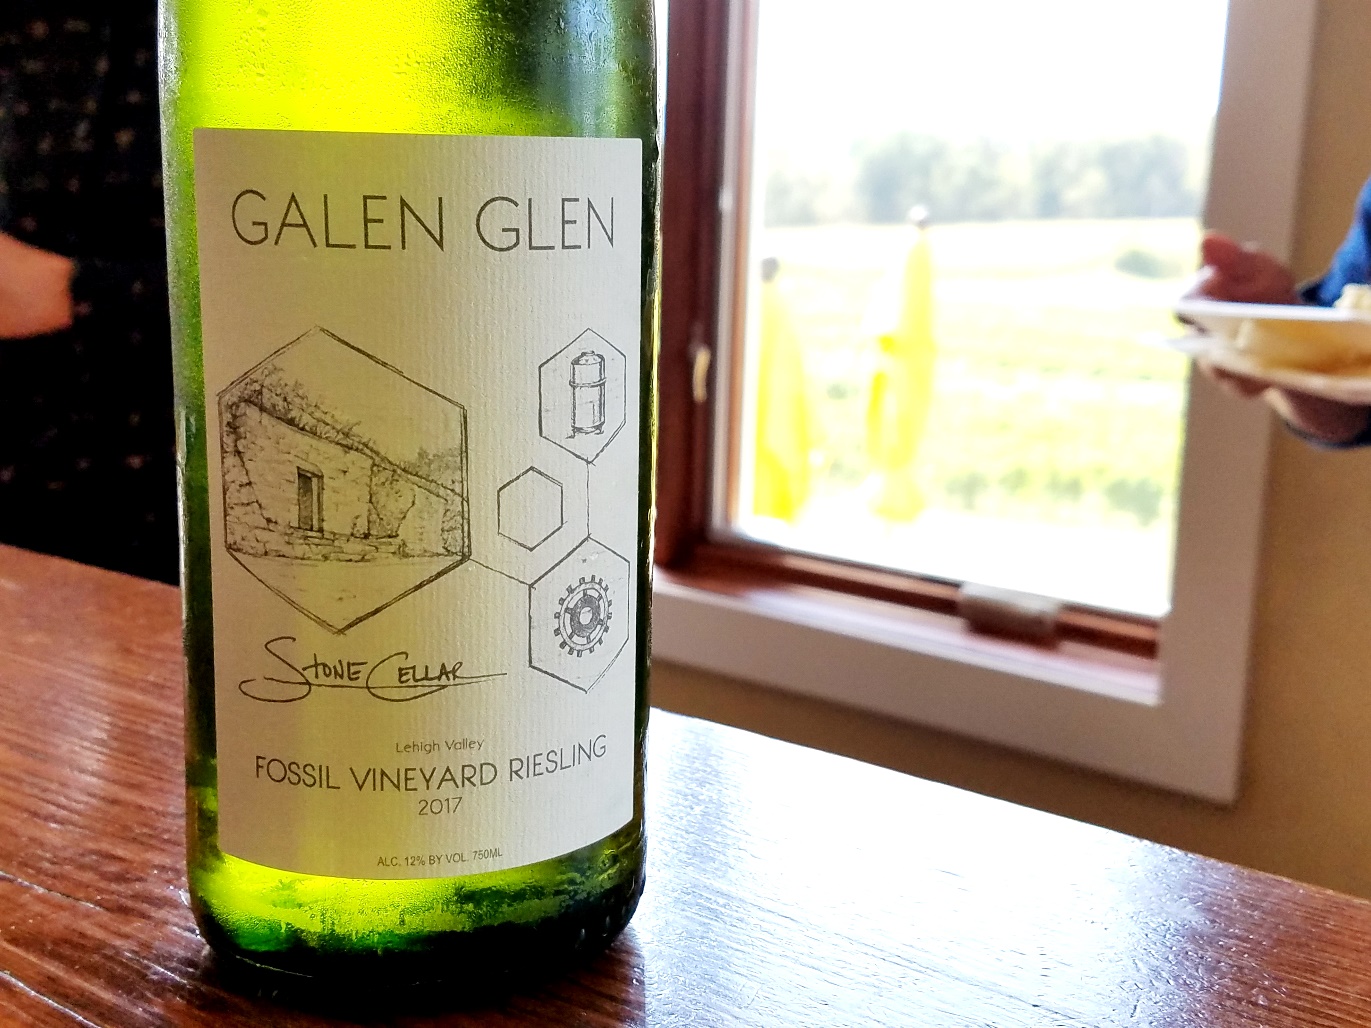 Galen Glen, Fossil Vineyard Riesling 2017, Stone Cellar, Lehigh Valley, Pennsylvania, Wine Casual